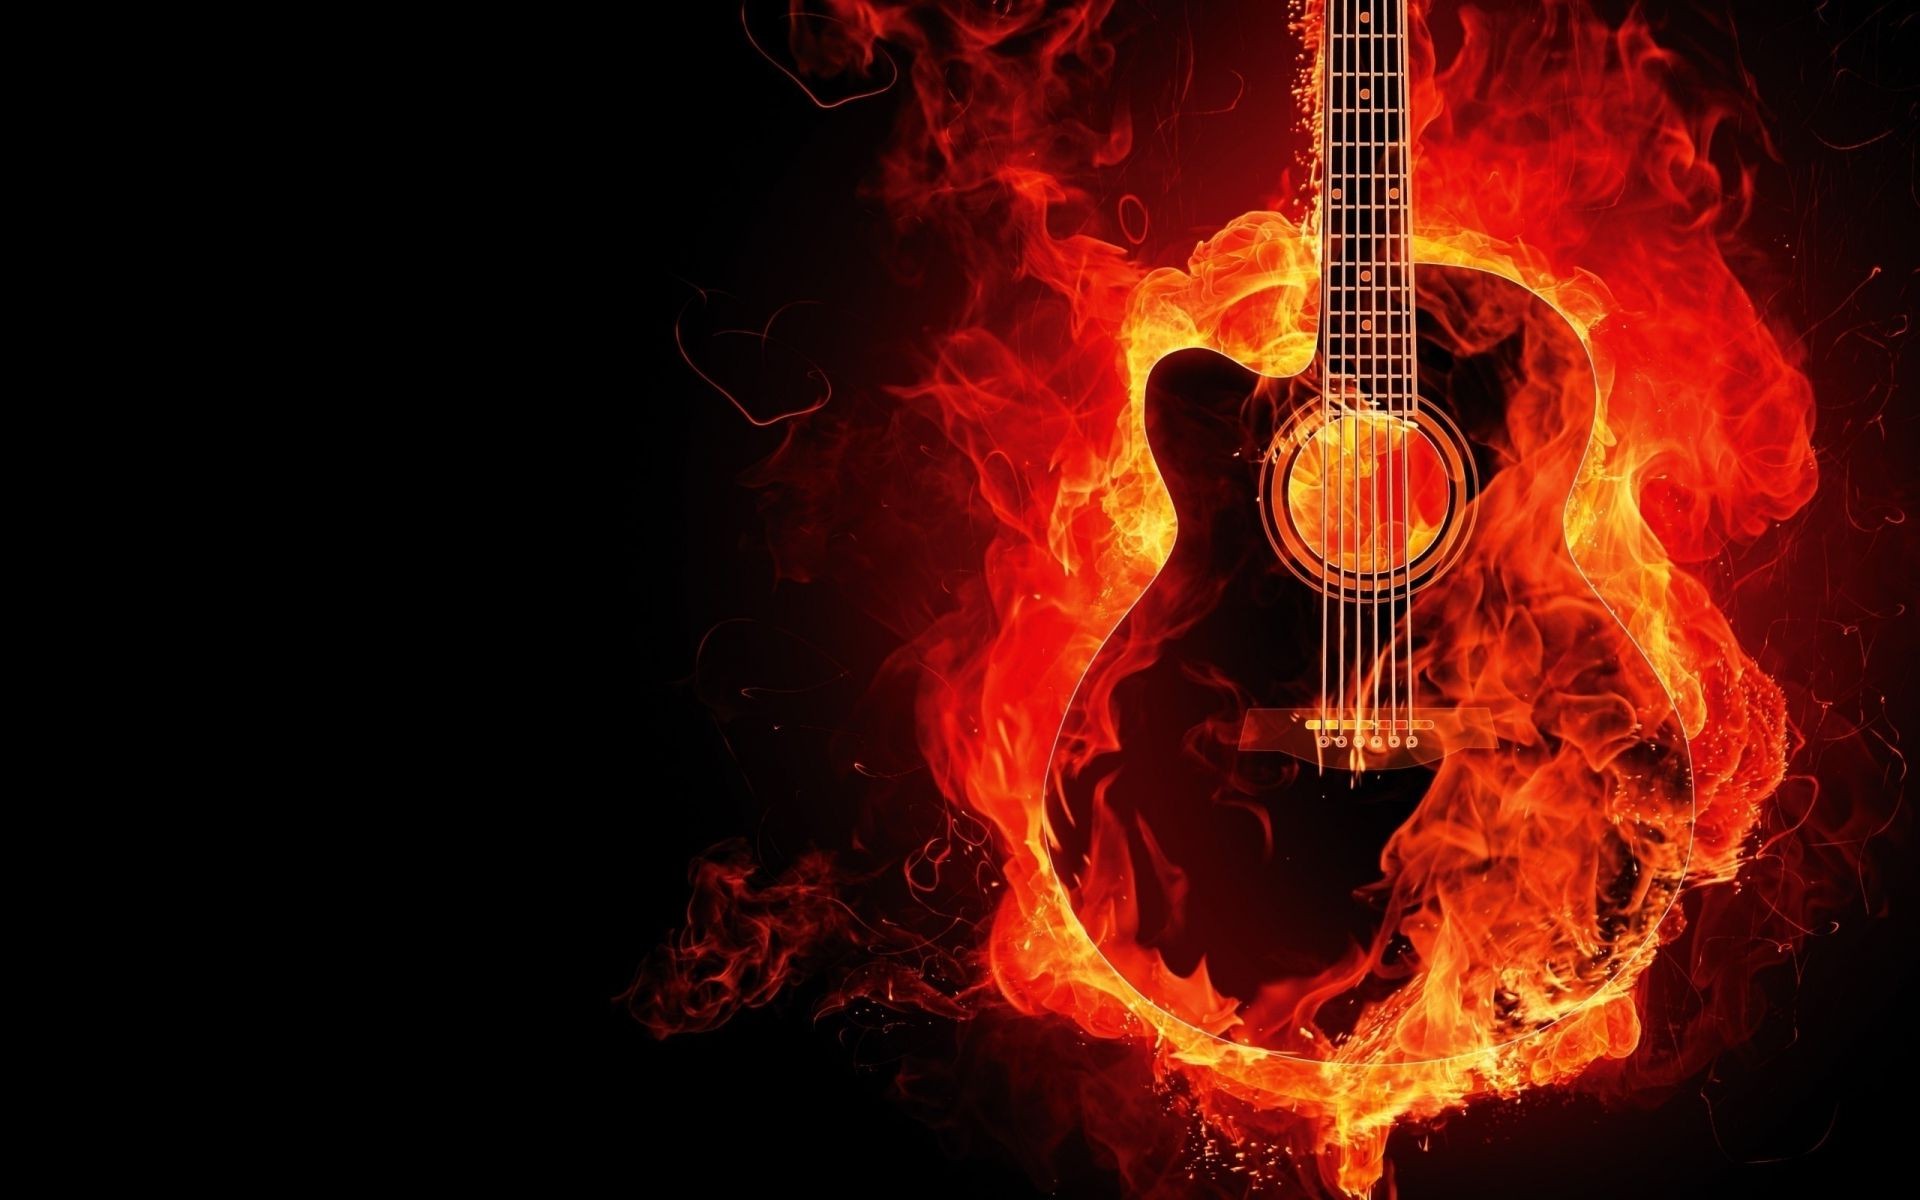 musical instruments flame smoke hot heat flammable ash burn burnt dark danger blaze energy